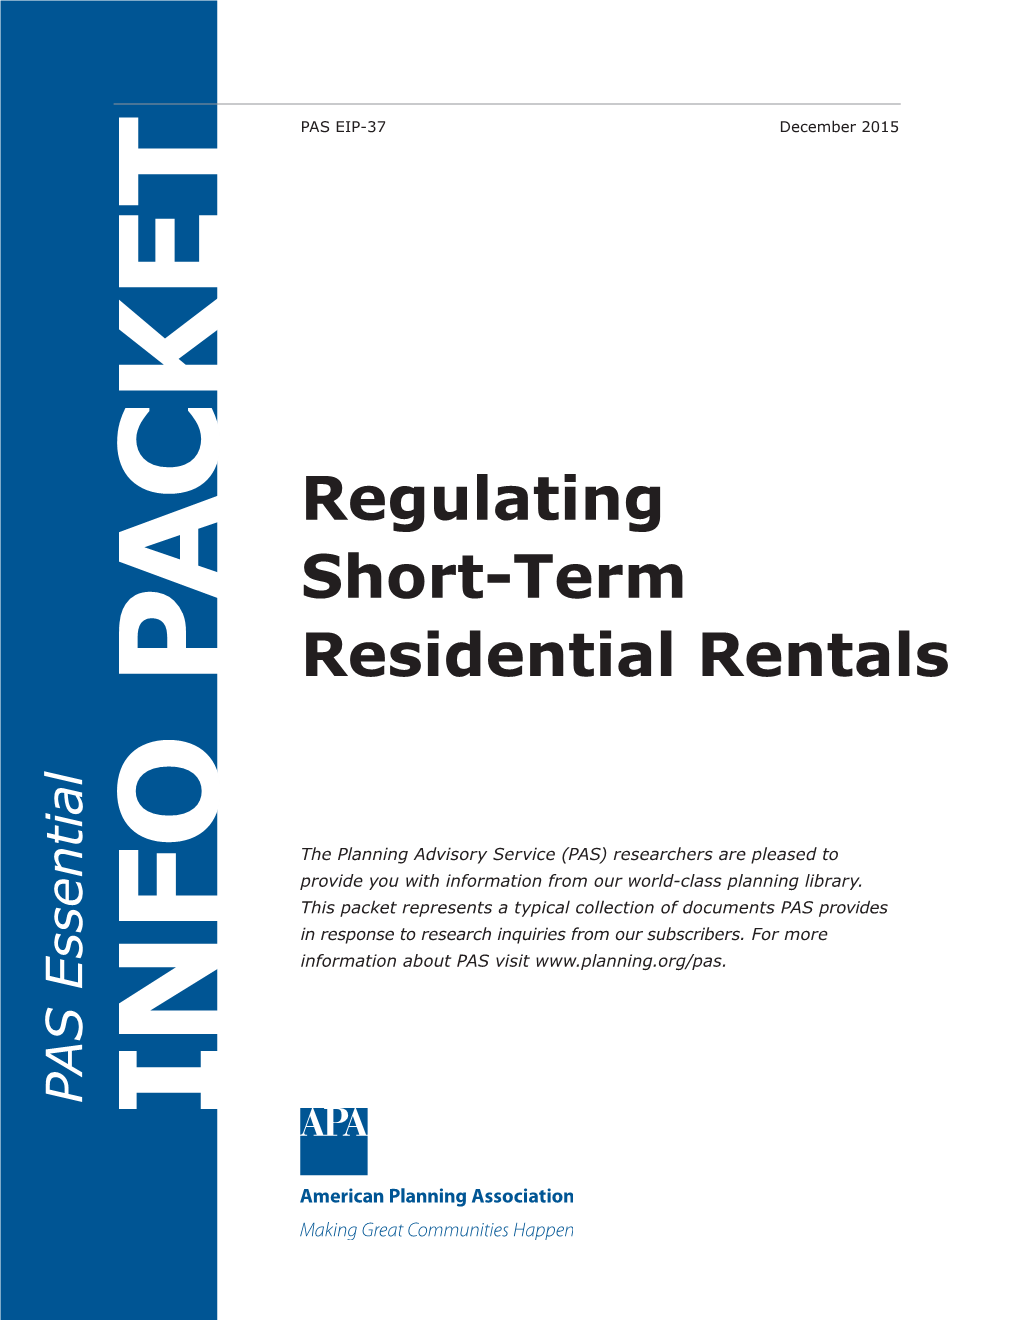 Regulating Short-Term Residential Rentals